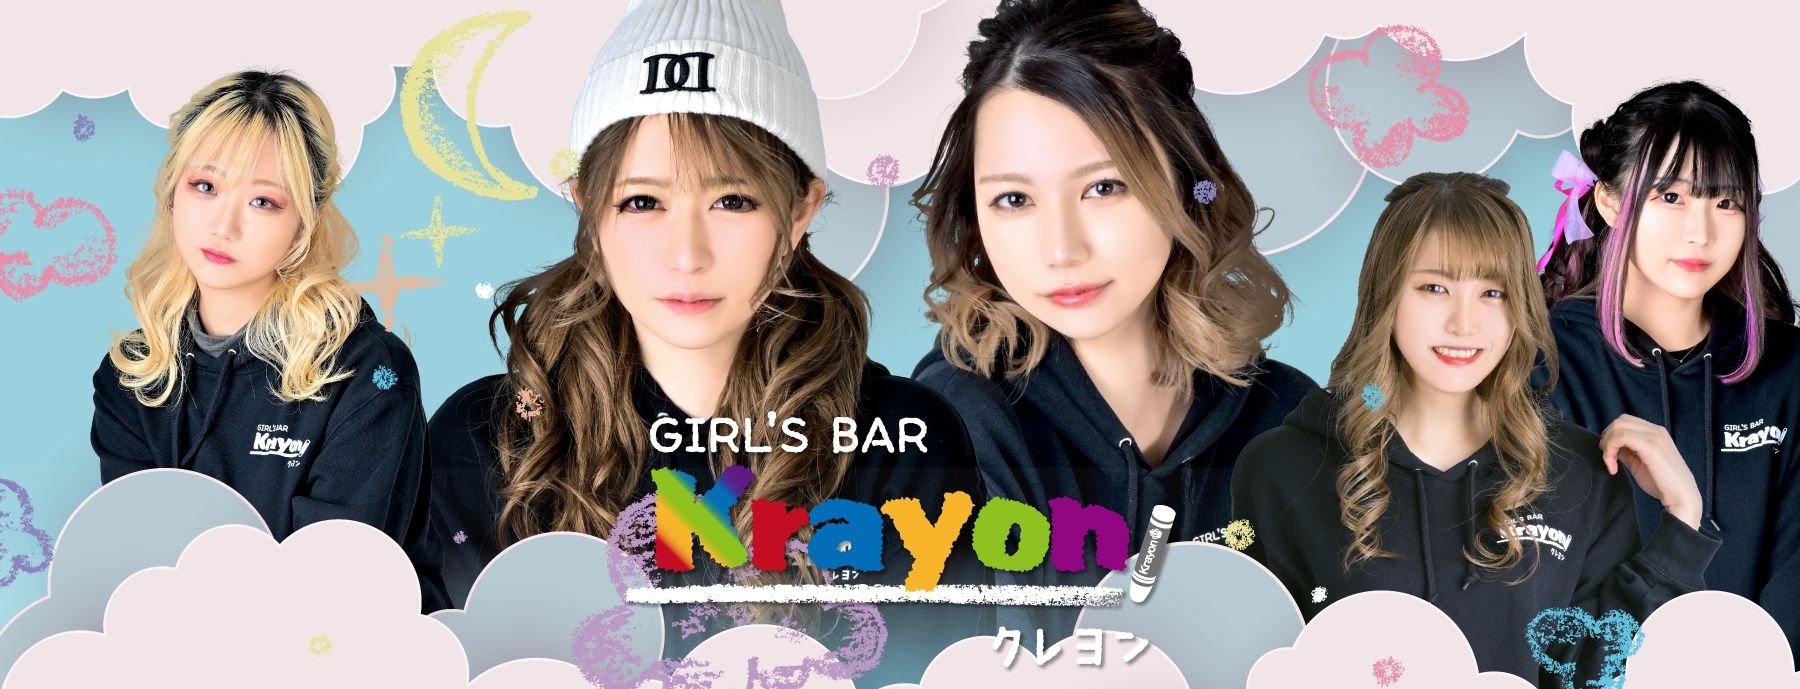 GIRL'S BAR Krayon　〜ガールズバークレヨン〜